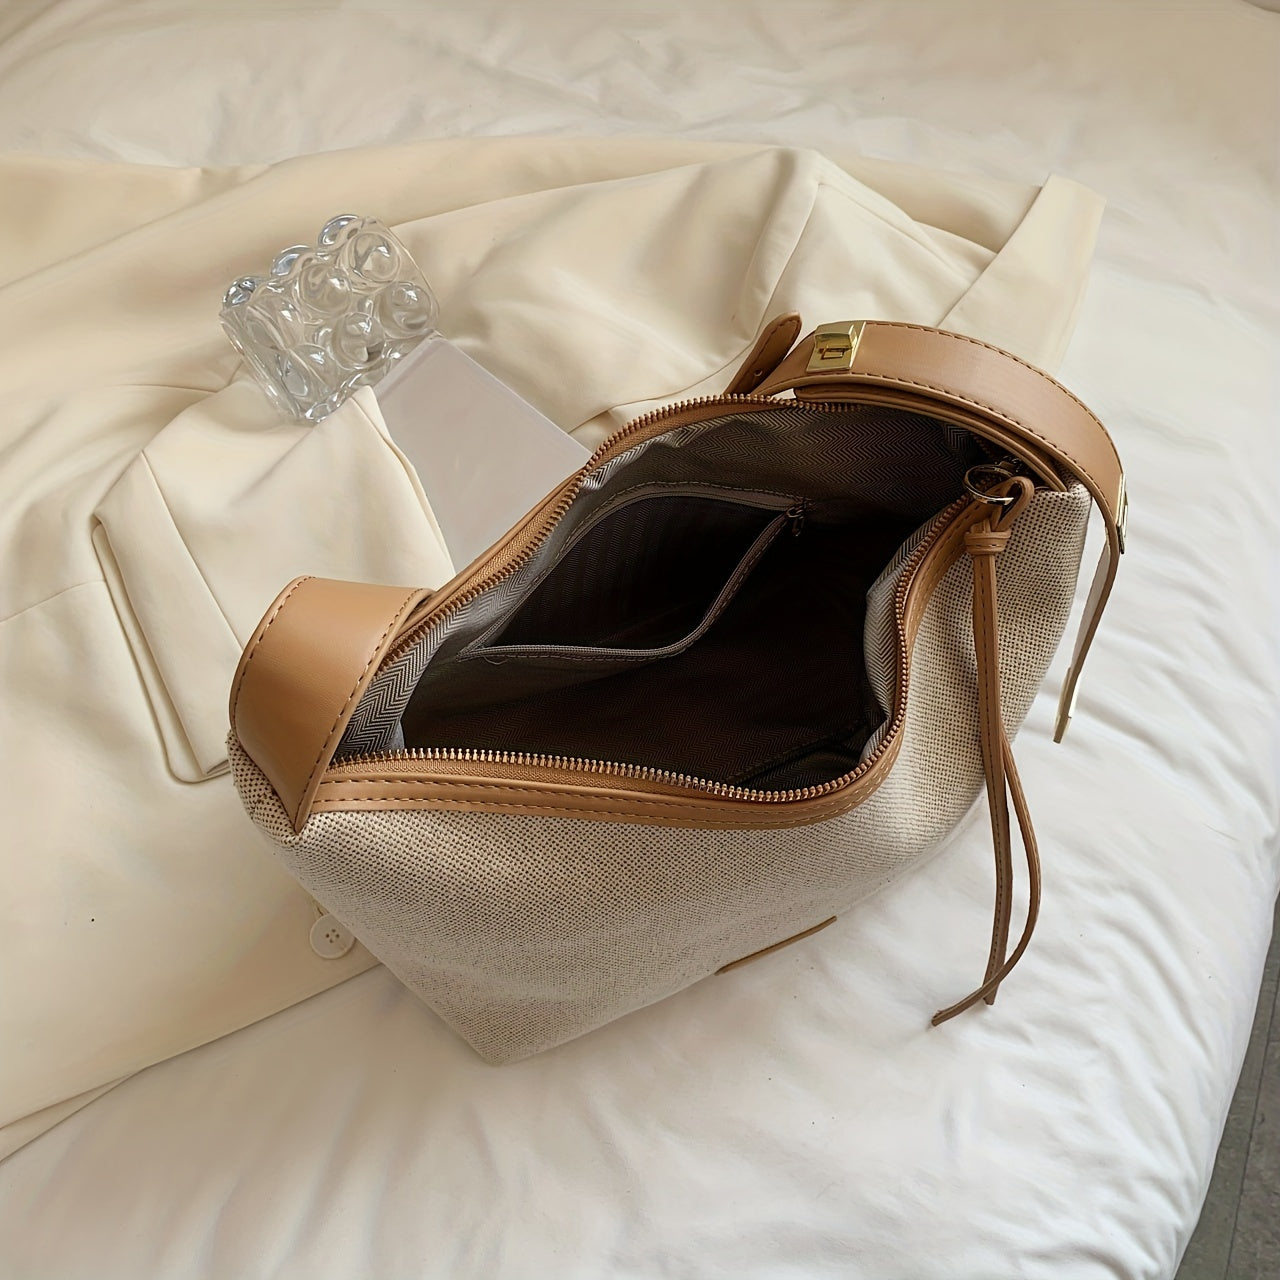 realaiot  Casual Minimalist Shoulder Bag, Classic Colorblock Hobo Bag, Women''s Canvas Handbag